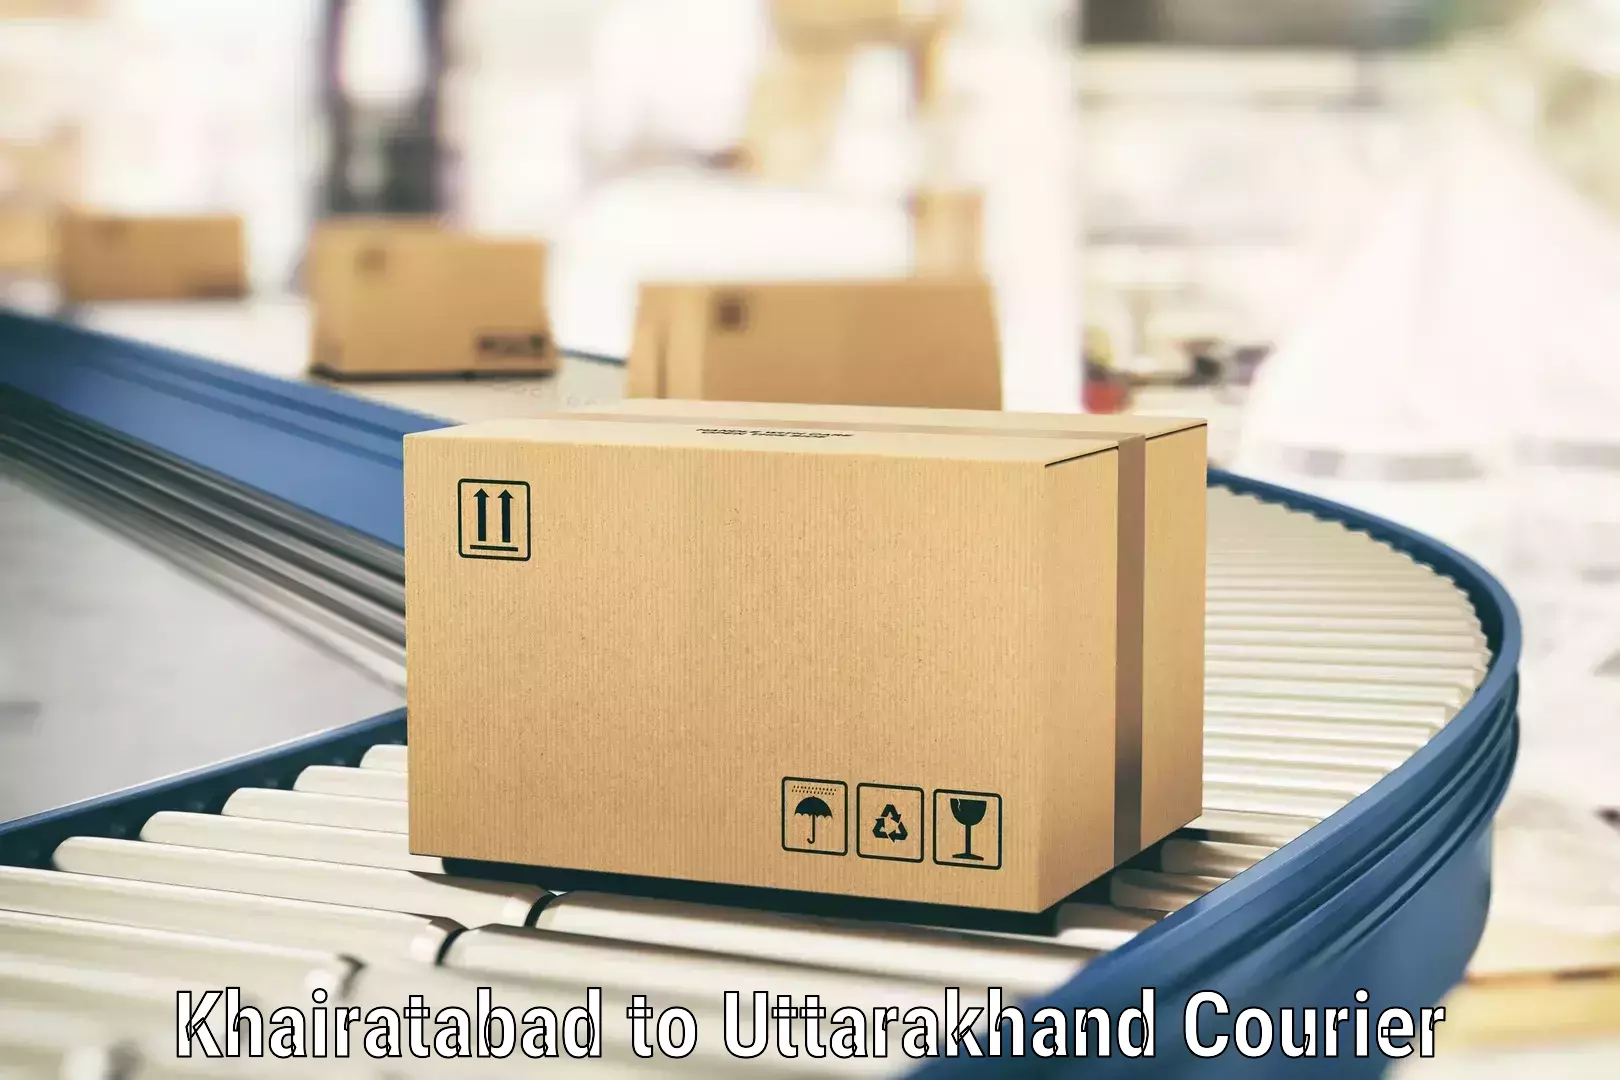 Flexible delivery schedules Khairatabad to Dehradun